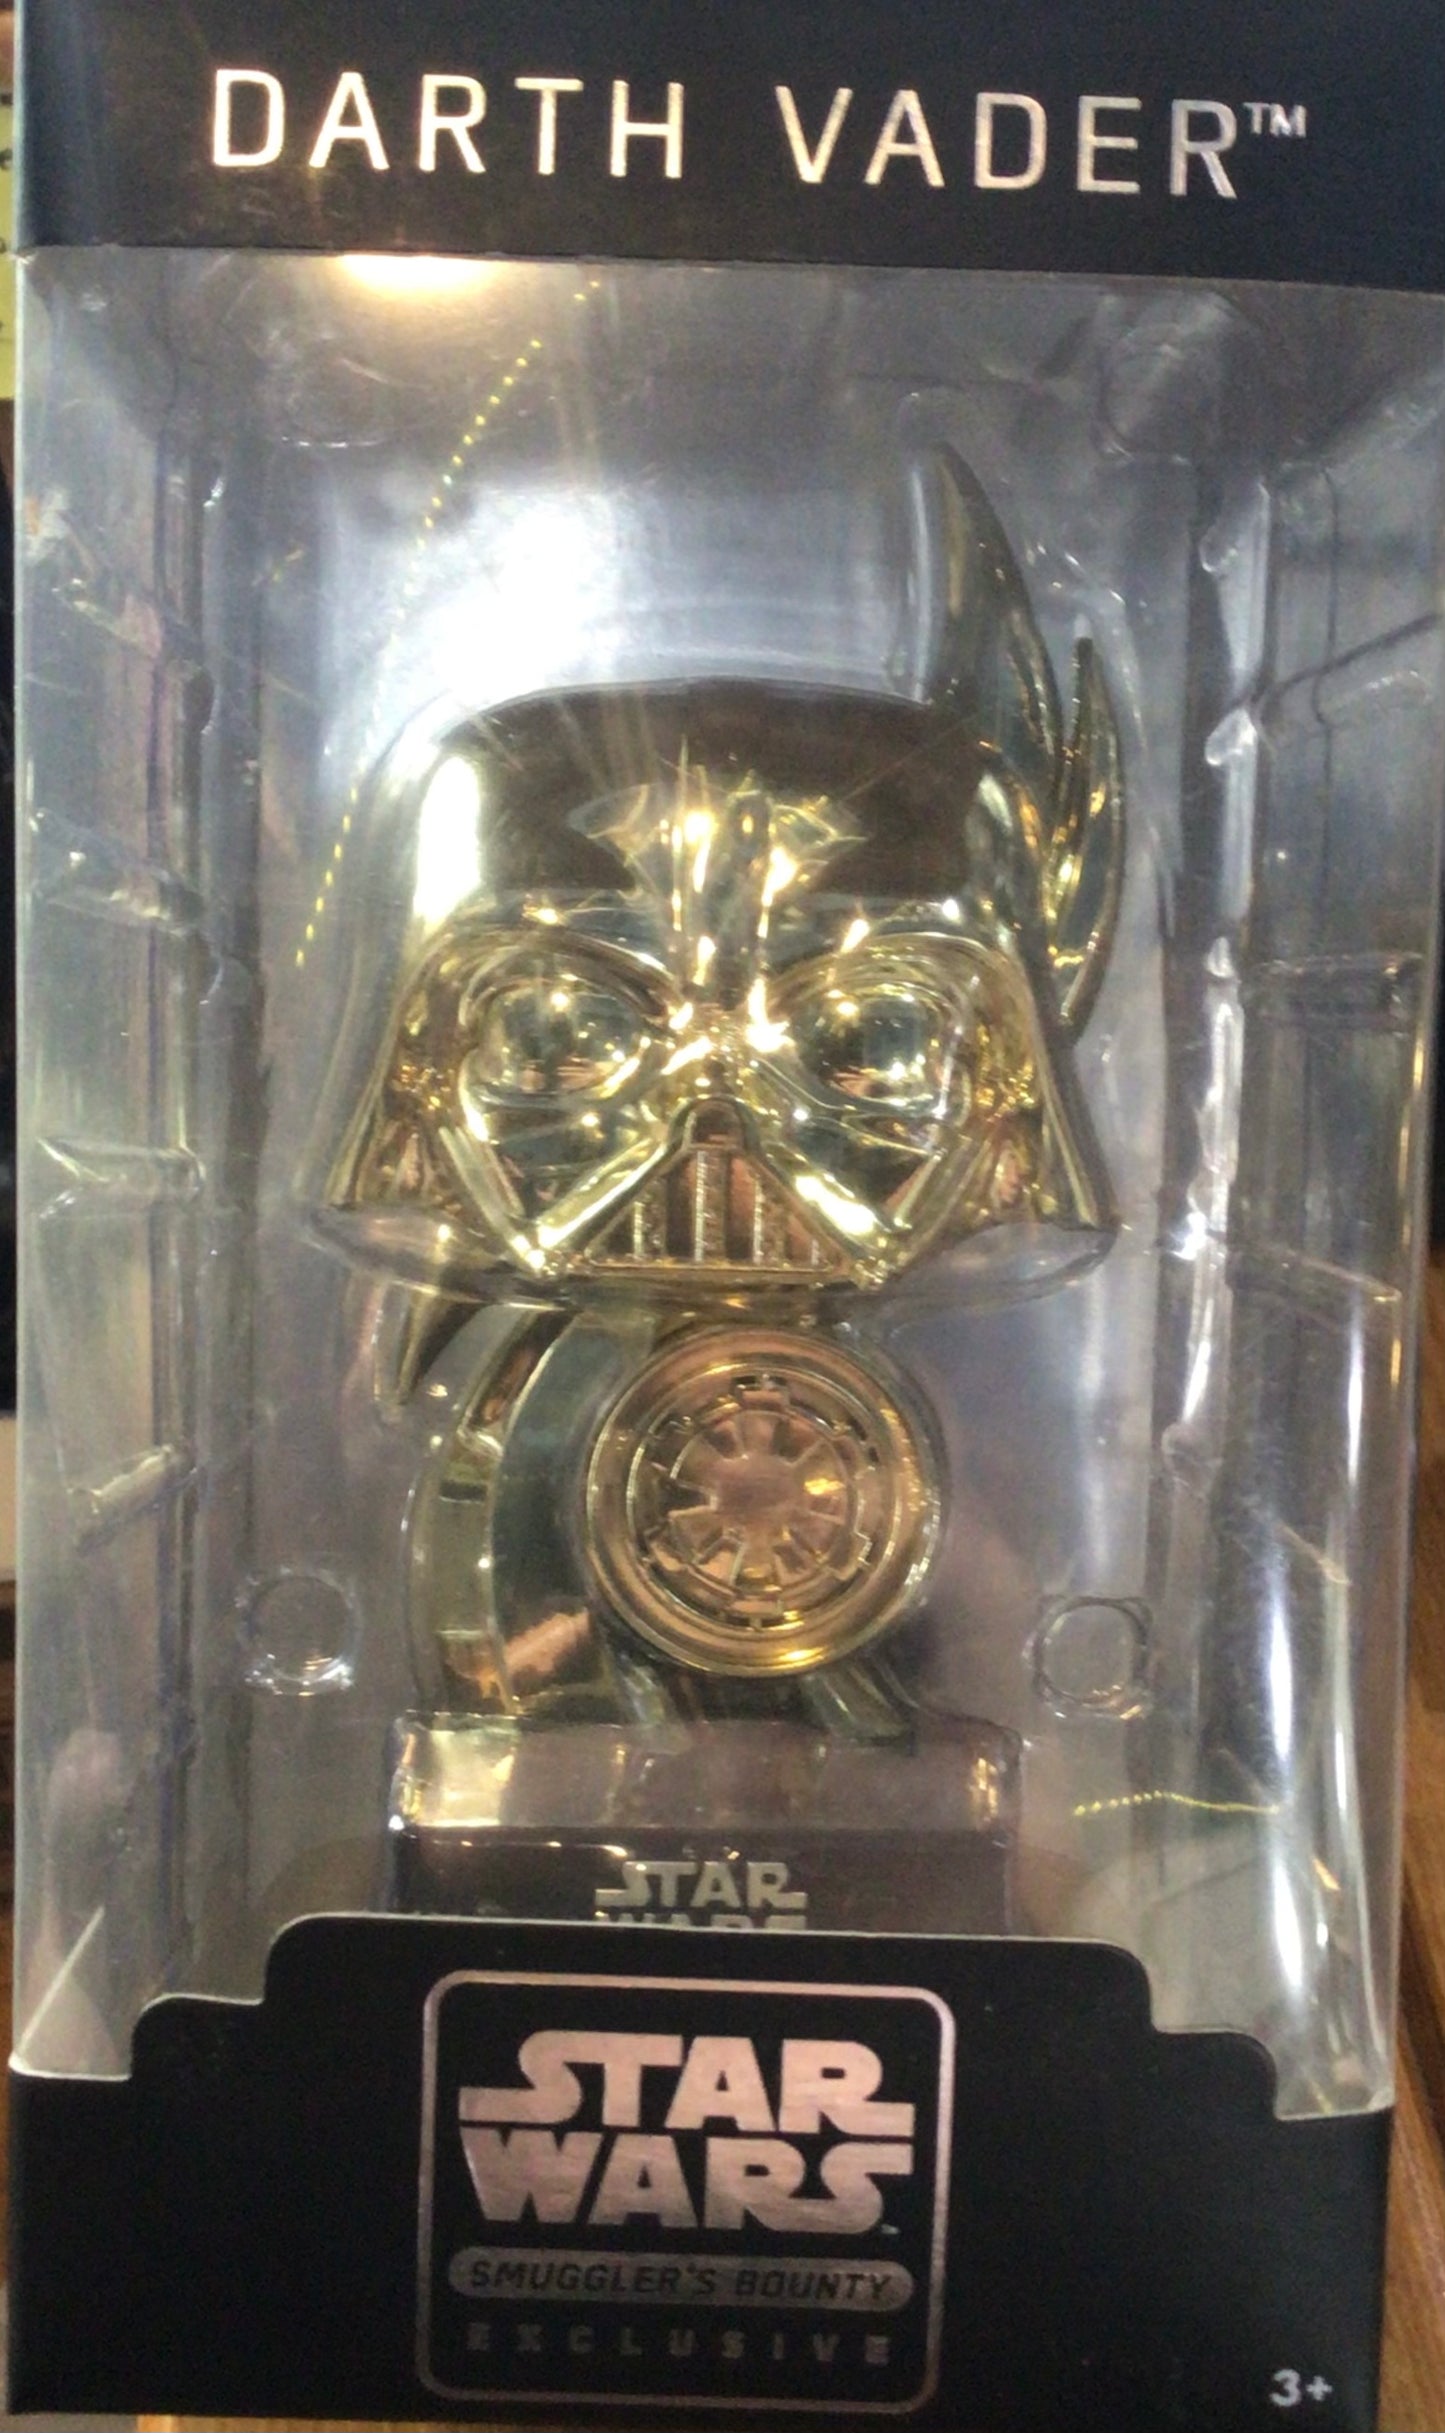 Star Wars Smuggler’s Bounty Exclusive Trophy - Darth Vader